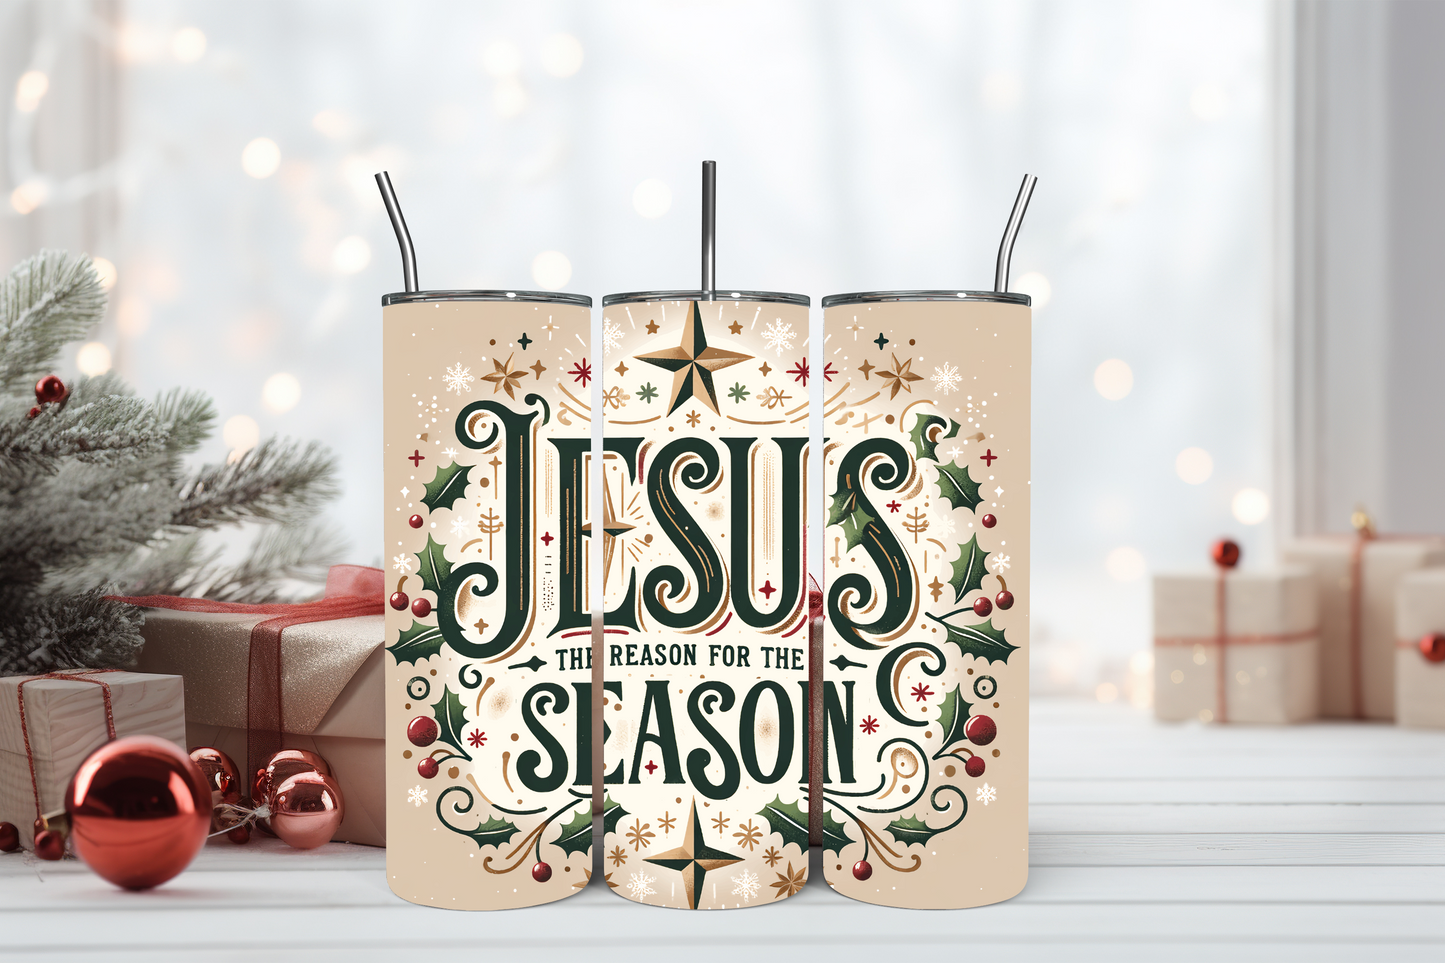 "Jesus is the reason for the season" written on a tumbler 20 oz